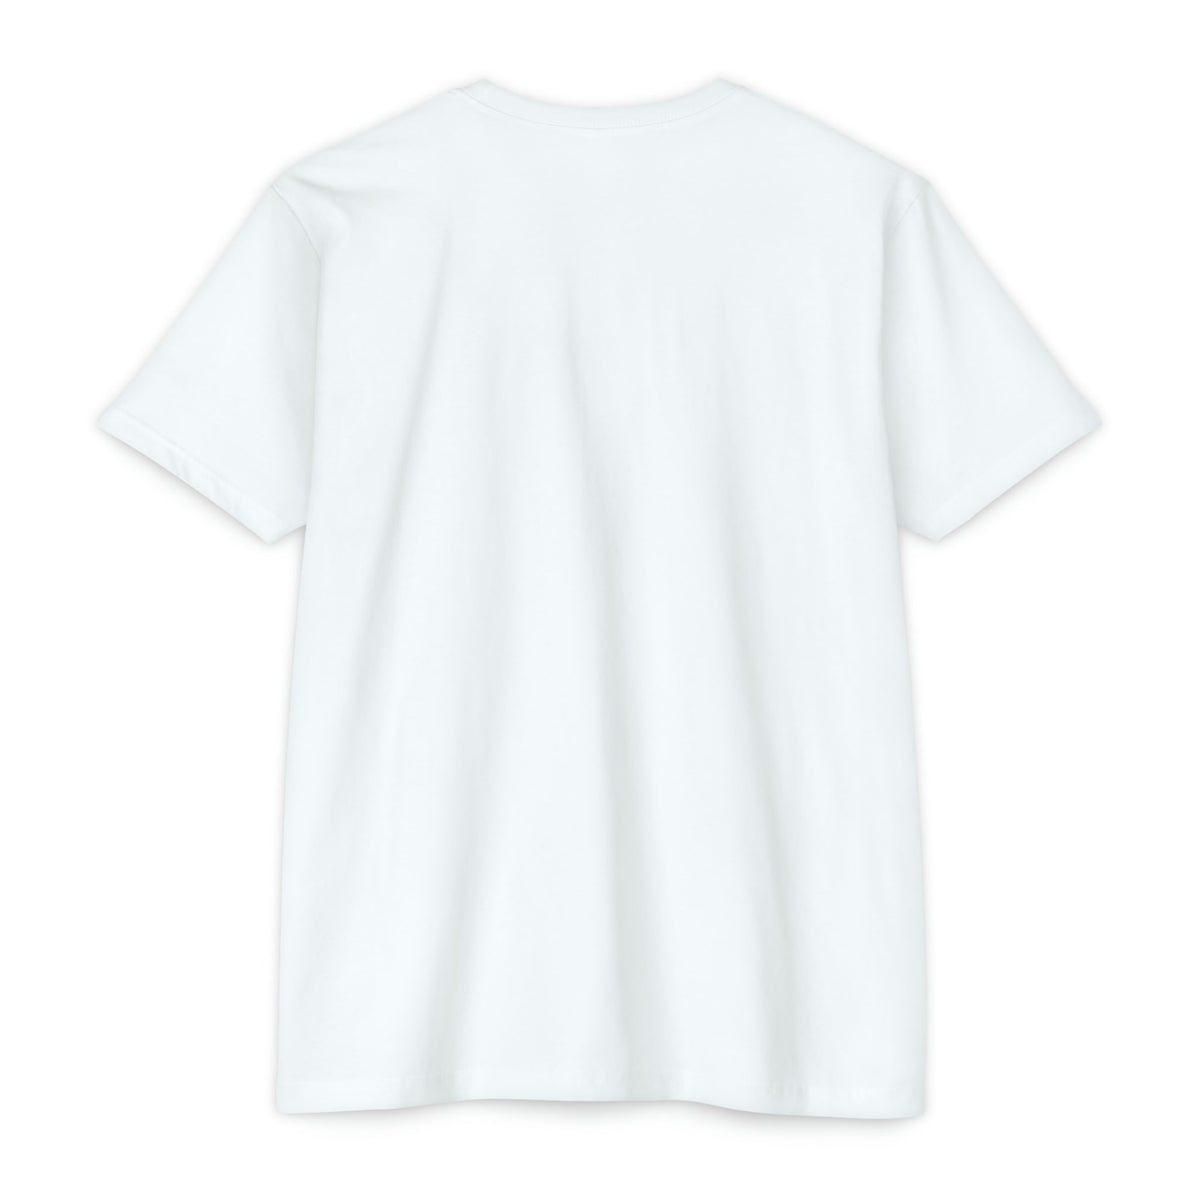 Wifey EST 2023 Unisex Jersey T-shirt